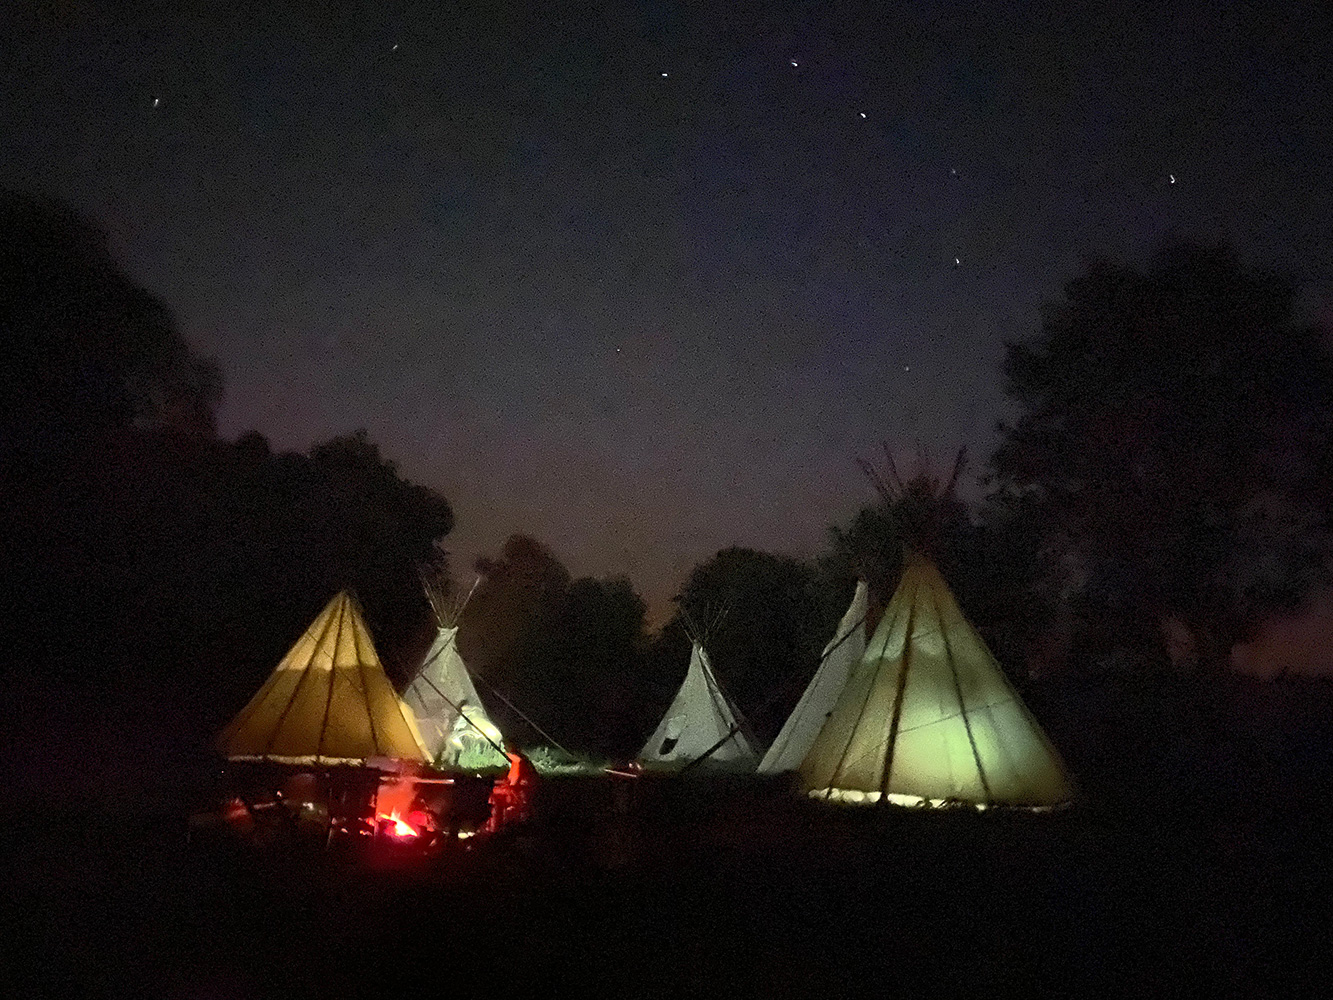 Tipi-Lager bei Nacht, Zelte bunt erleuchtet